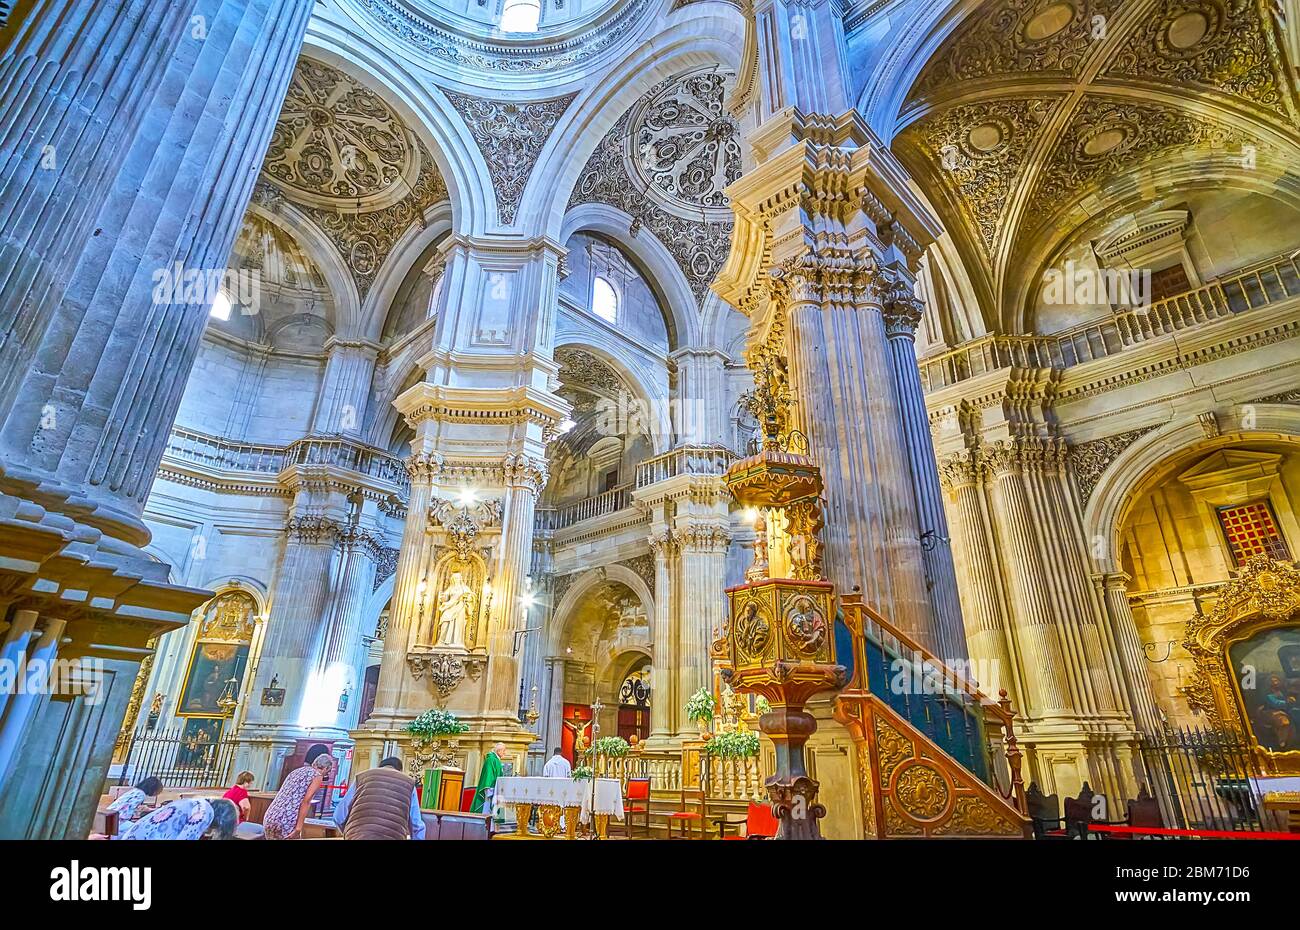 GRANADA, SPAIN - SEPTEMBER 27, 2019: Explore historic Baroque prayer hall of Sagrario (Sacred Heart) church with relief stone columns, ornate domes, c Stock Photo